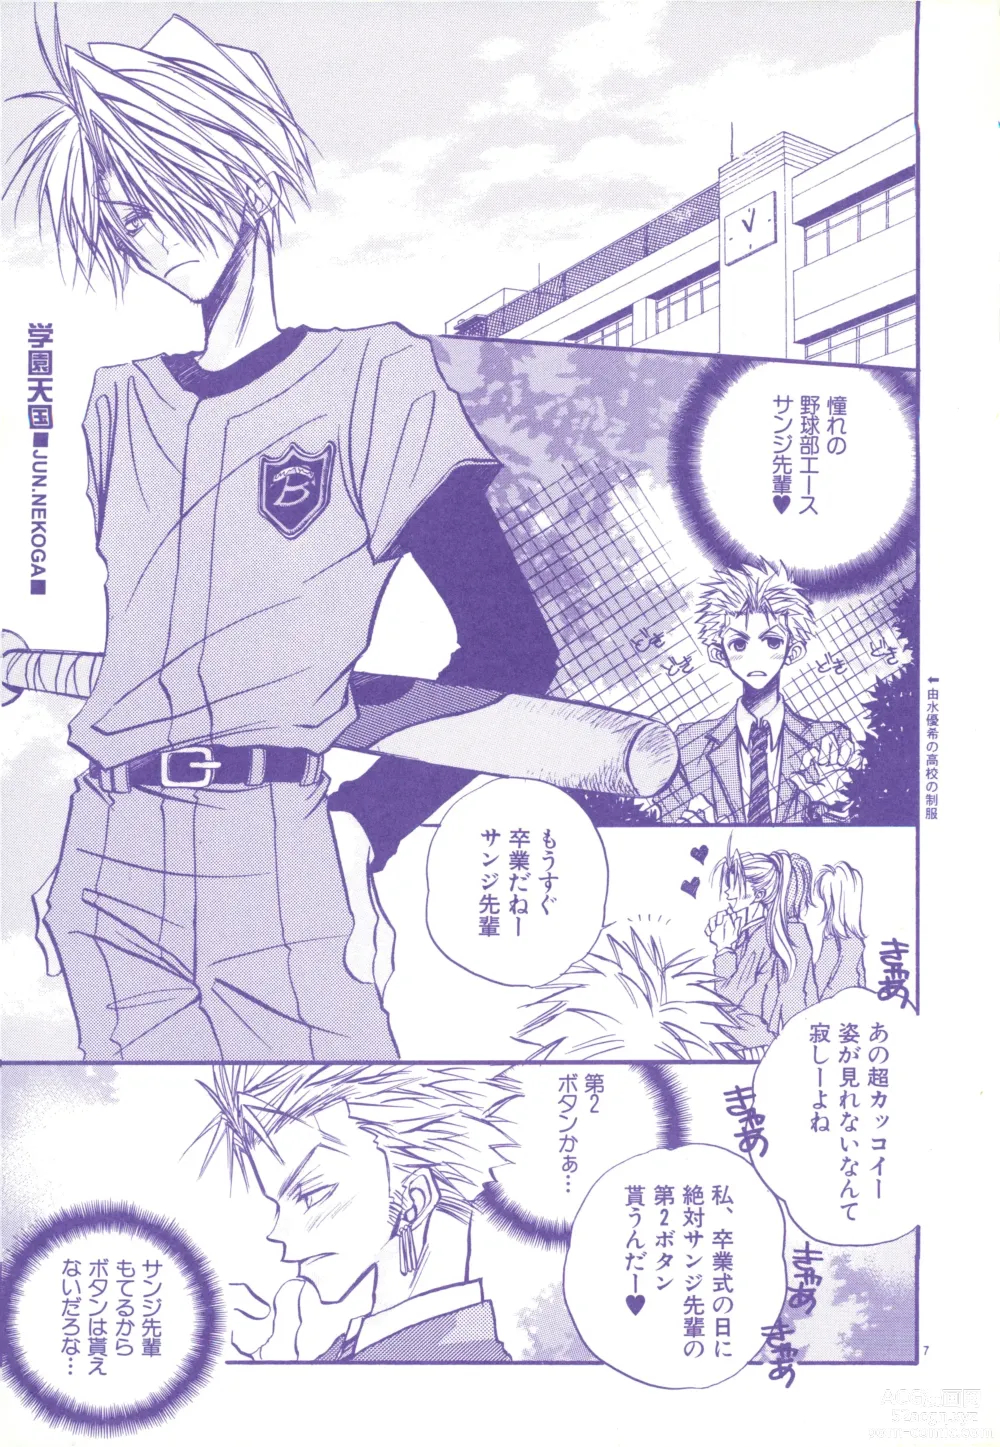 Page 6 of doujinshi FLASH BACK